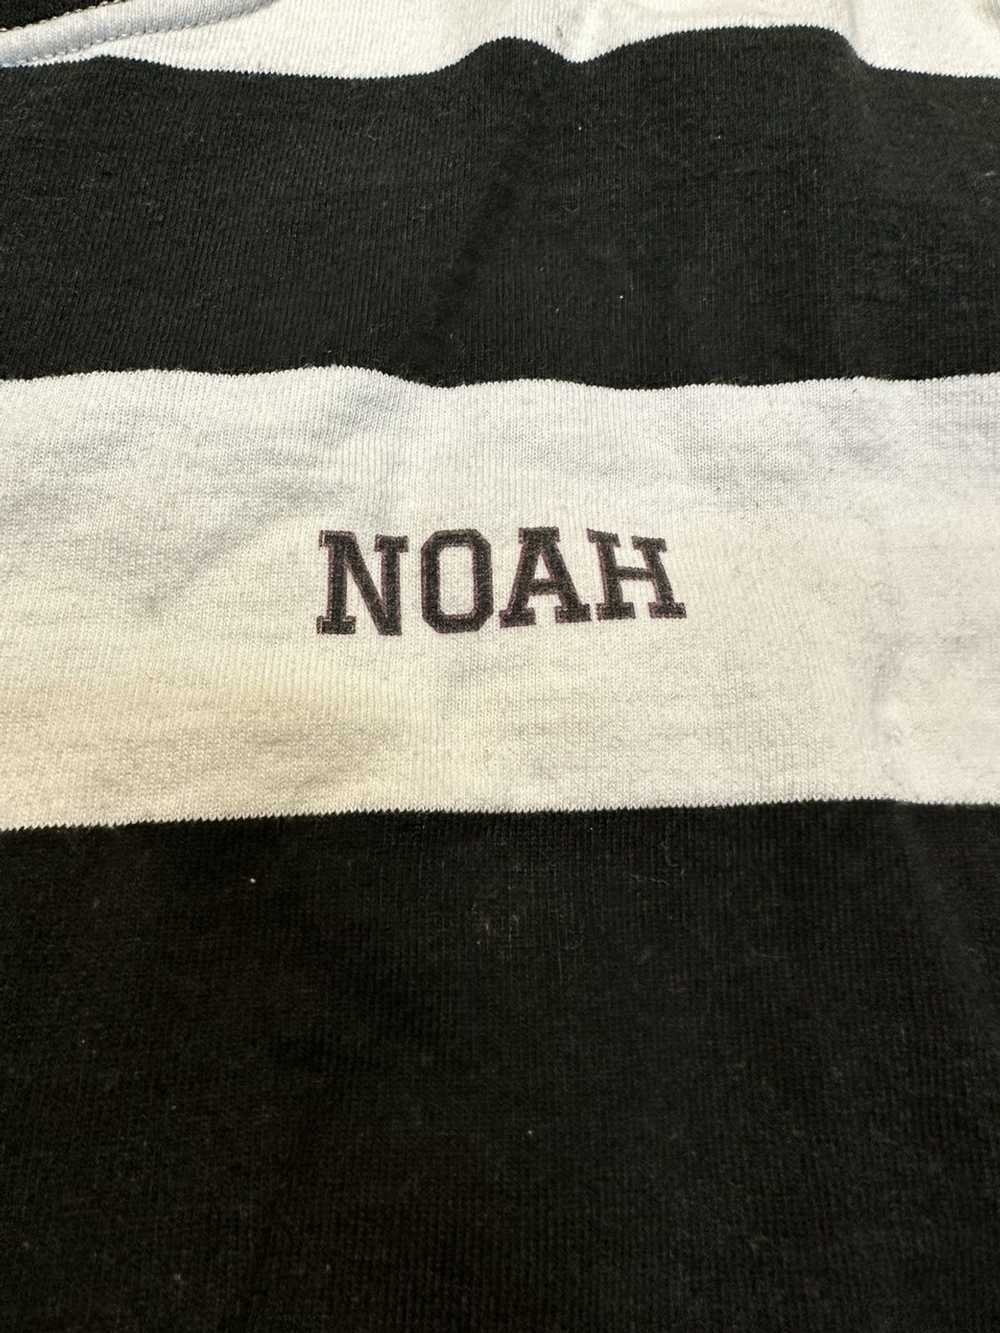 Noah 2016 NOAH CLOTH TEE SHIRT HARD TO FIND - image 5